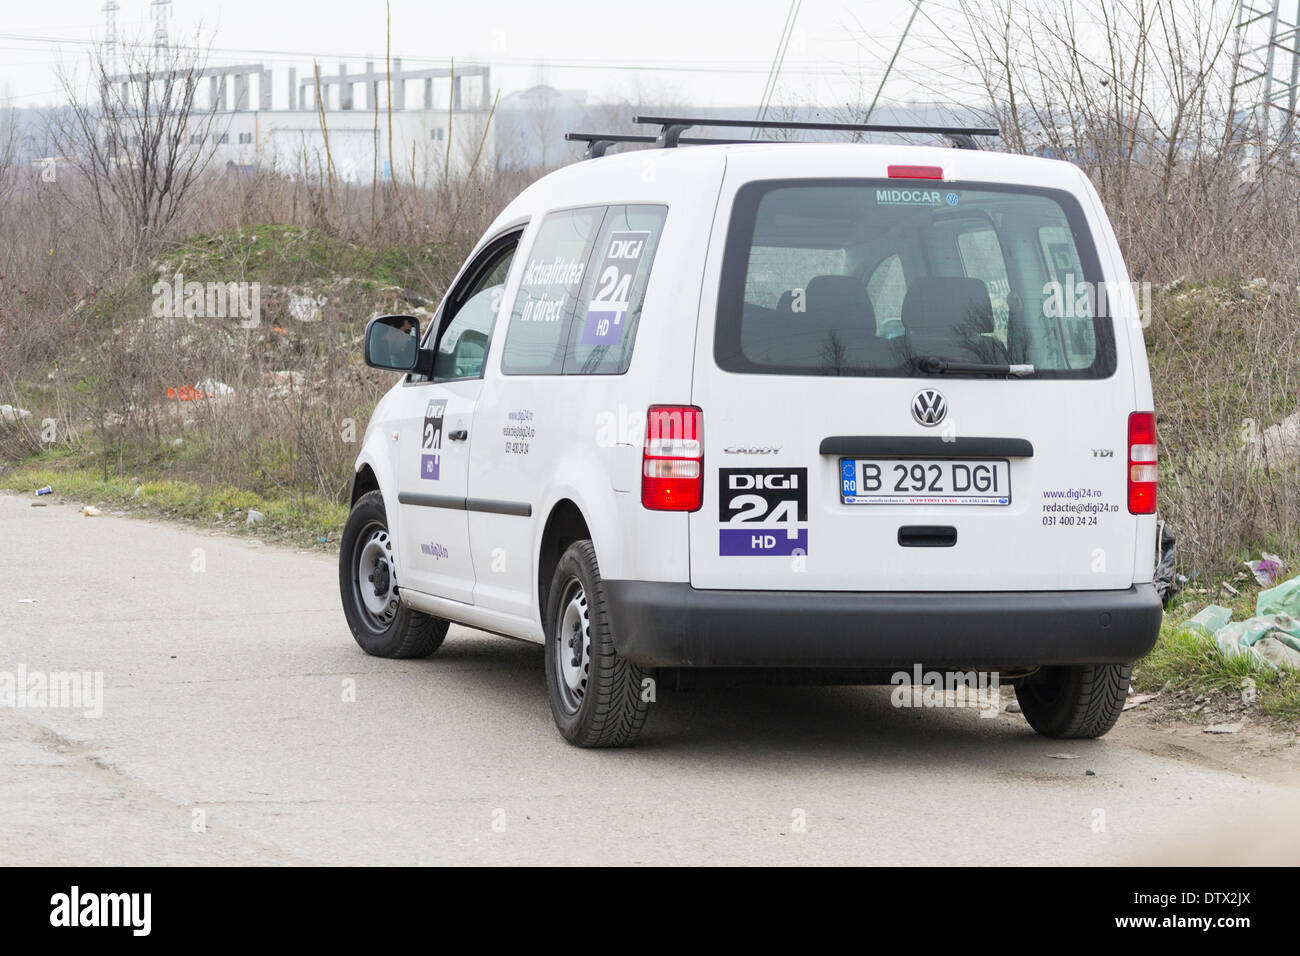 Digi TV news car on a road in Bucharest, Romania Stock Photo